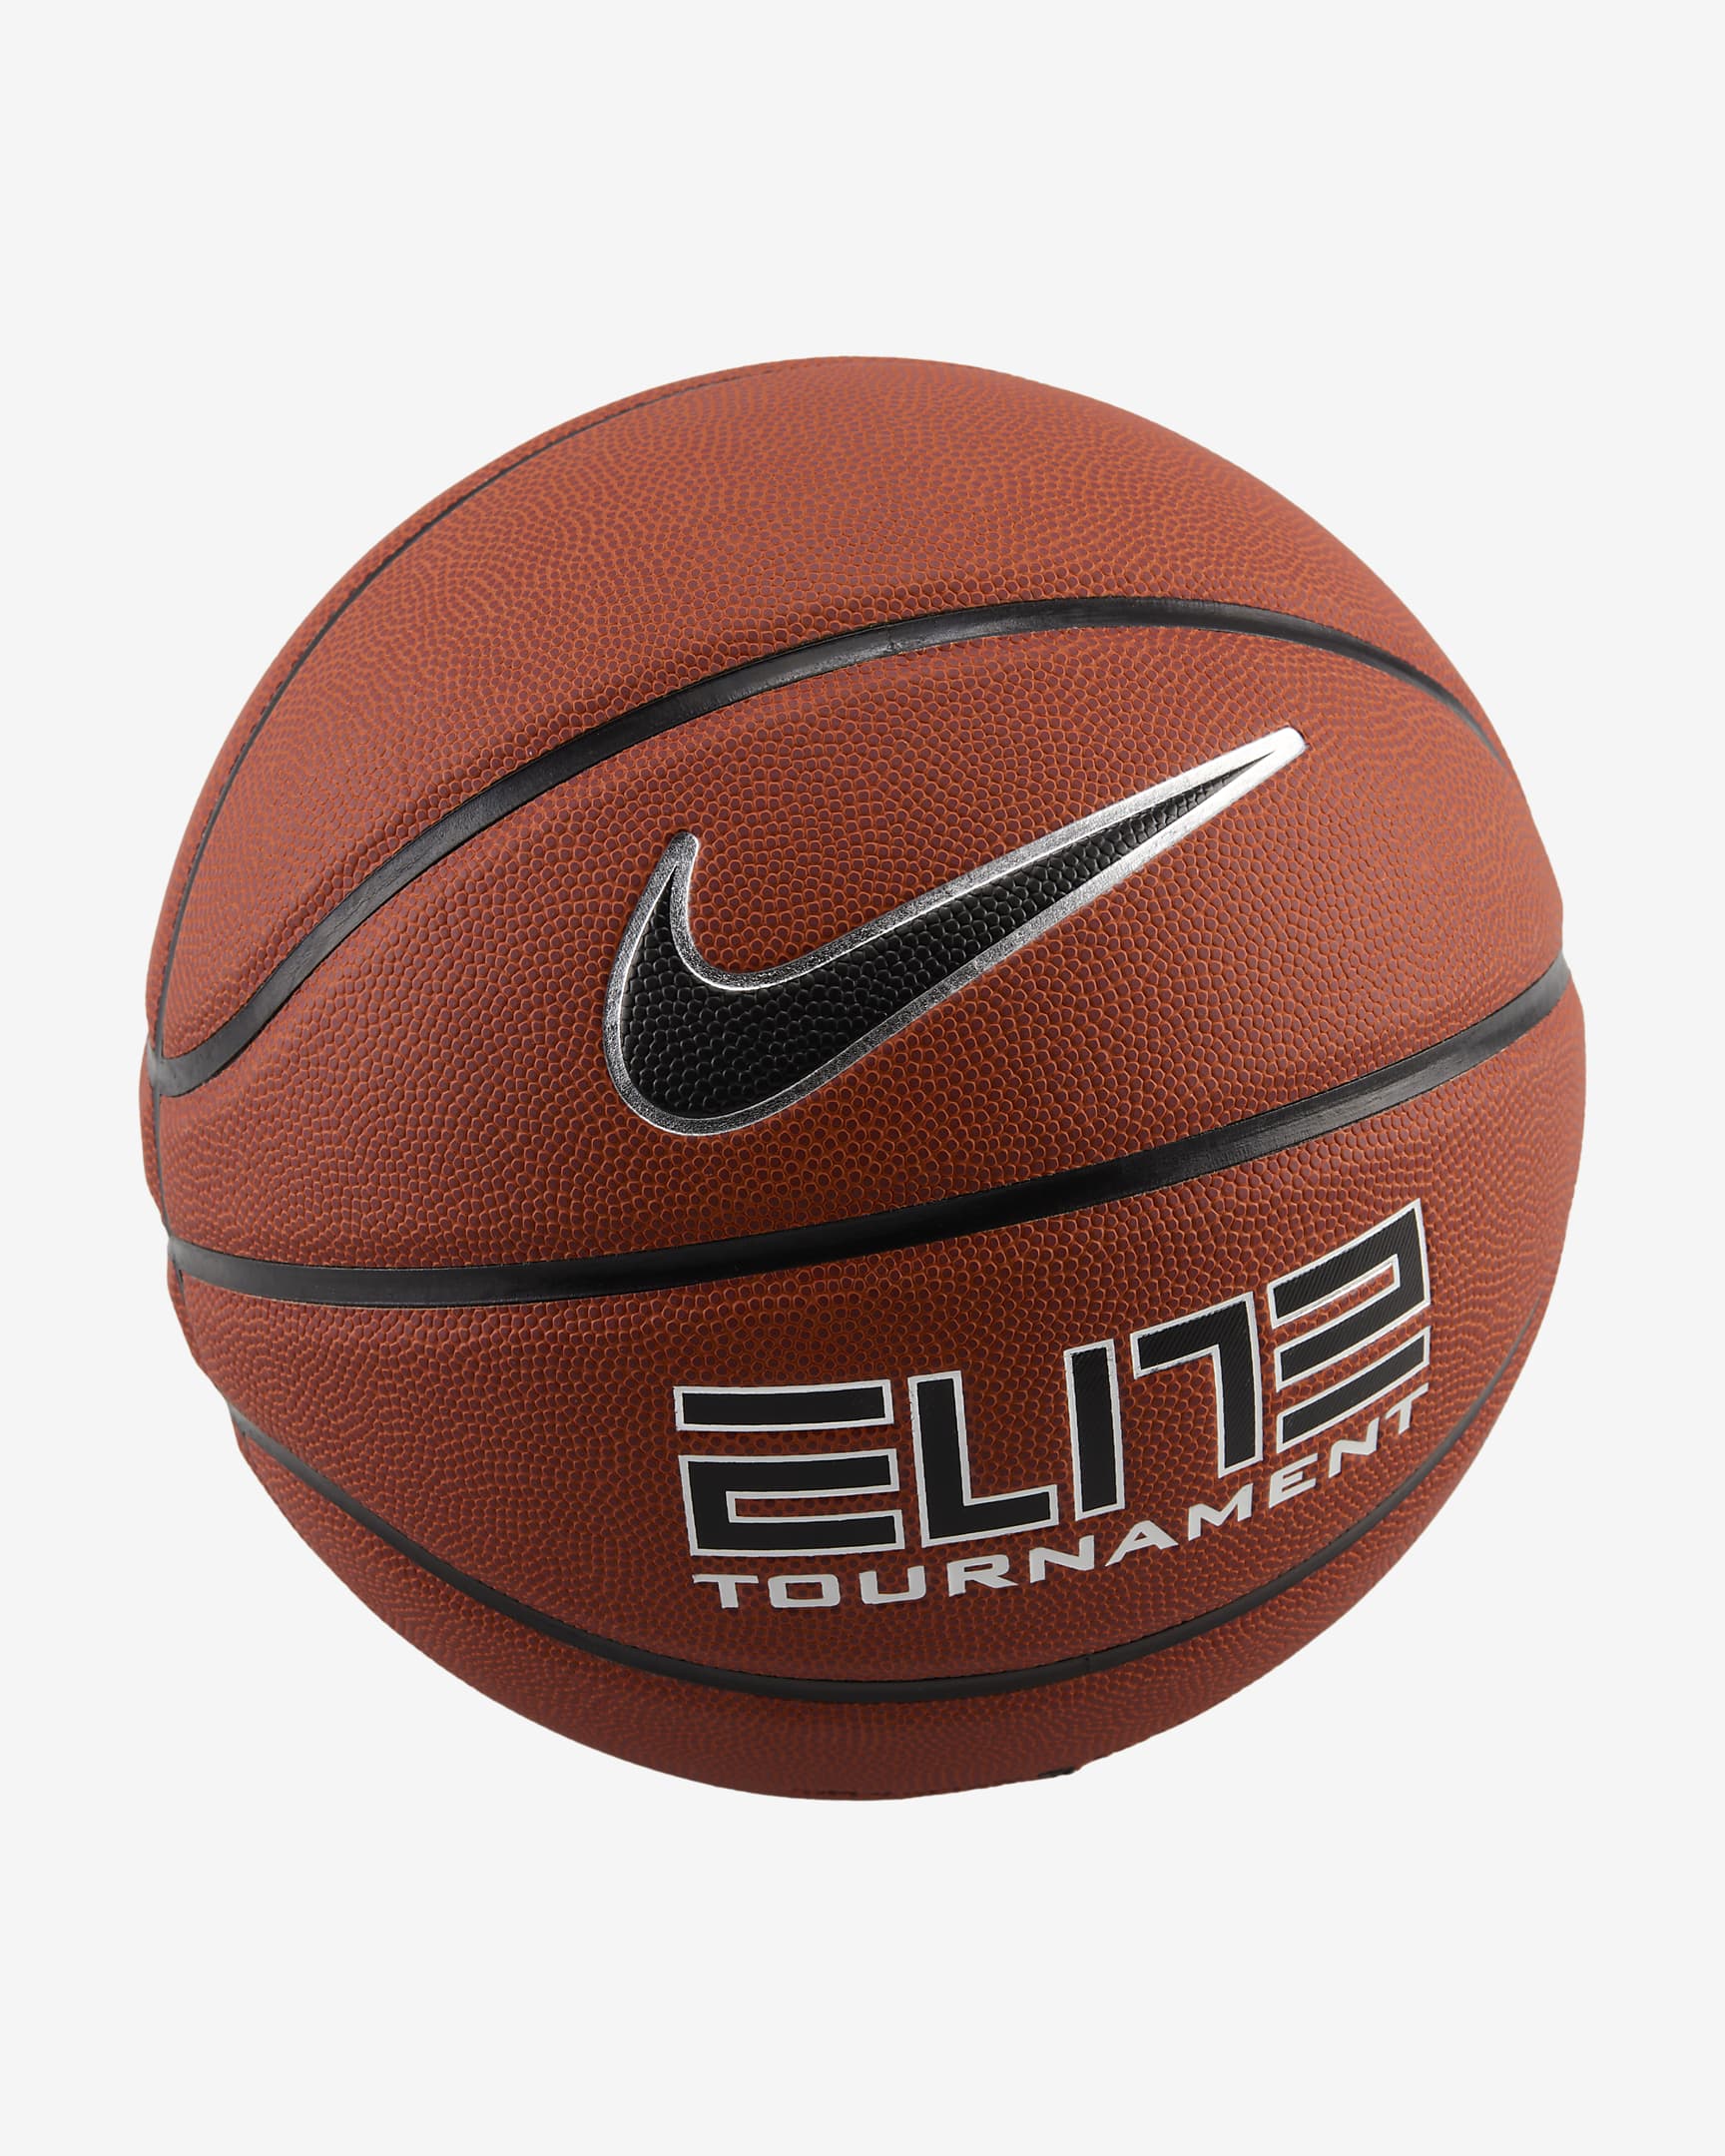 Nike Elite Tournament 8-Panel Basketball (Deflated). Nike DK